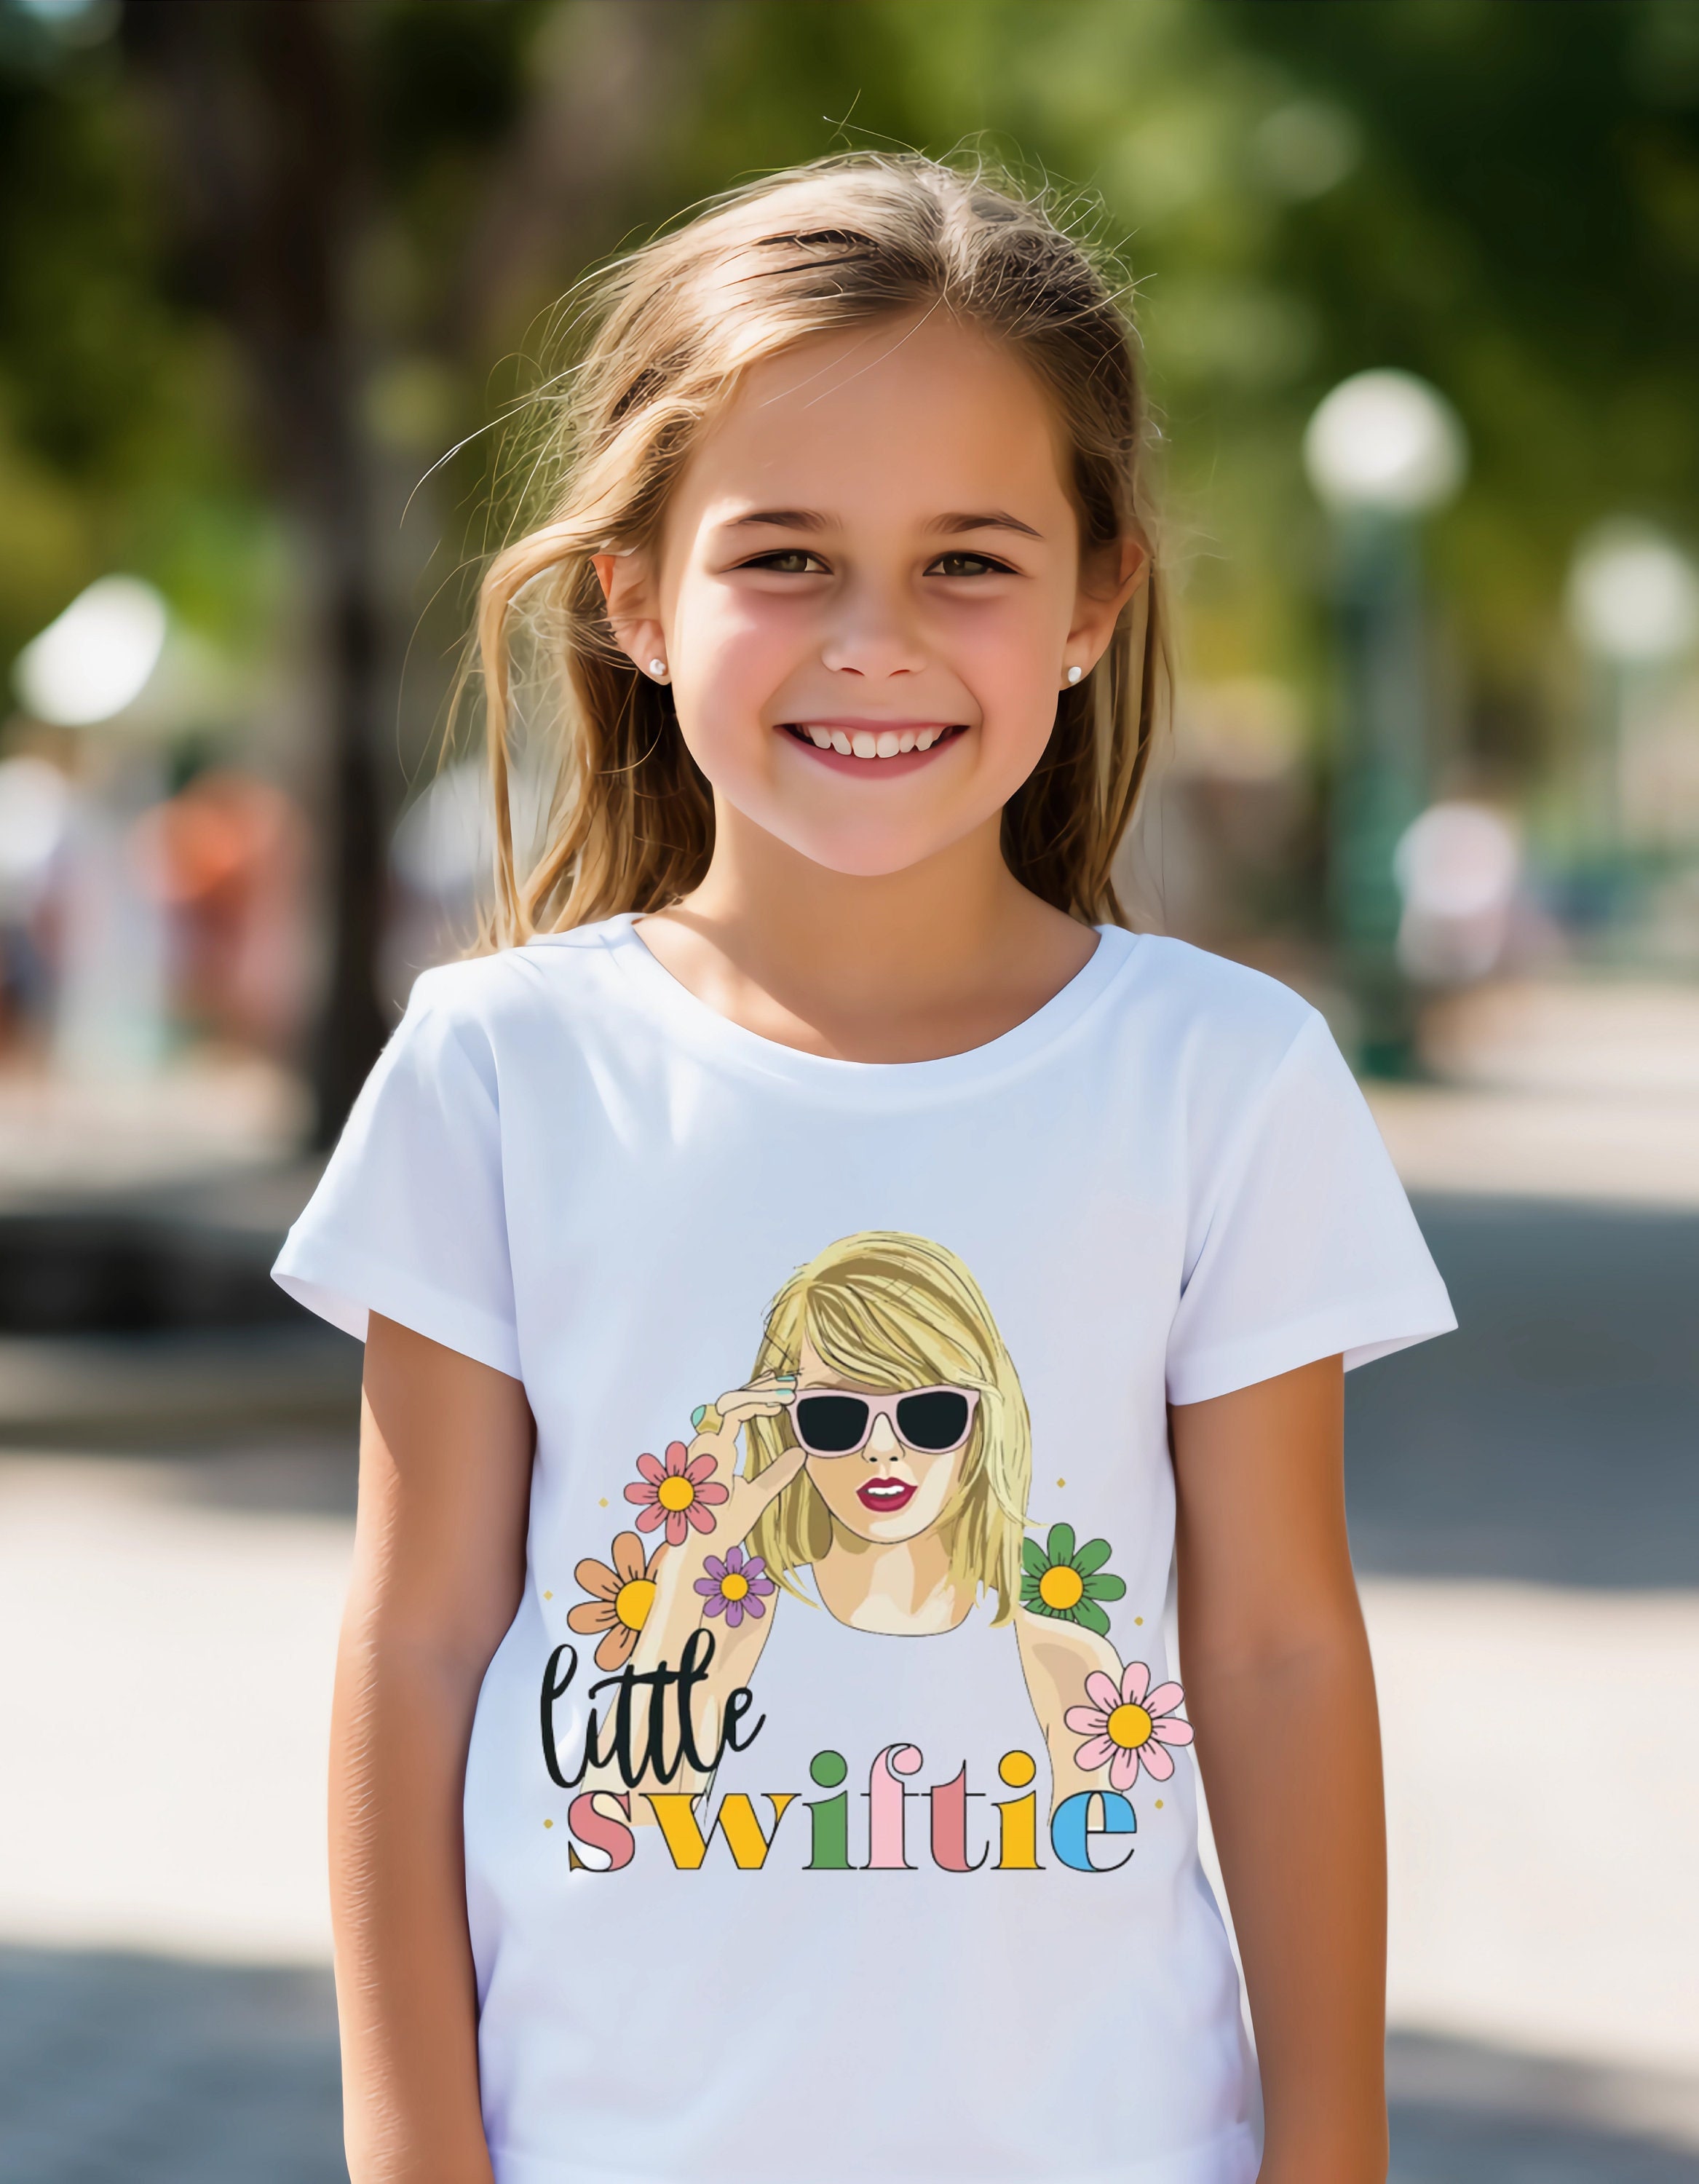 Jesus Taylor Swift Shirt Funny Taylor Swift Shirt Swift Shirt Swiftie Shirt  Taylor Swift Merch - Laughinks